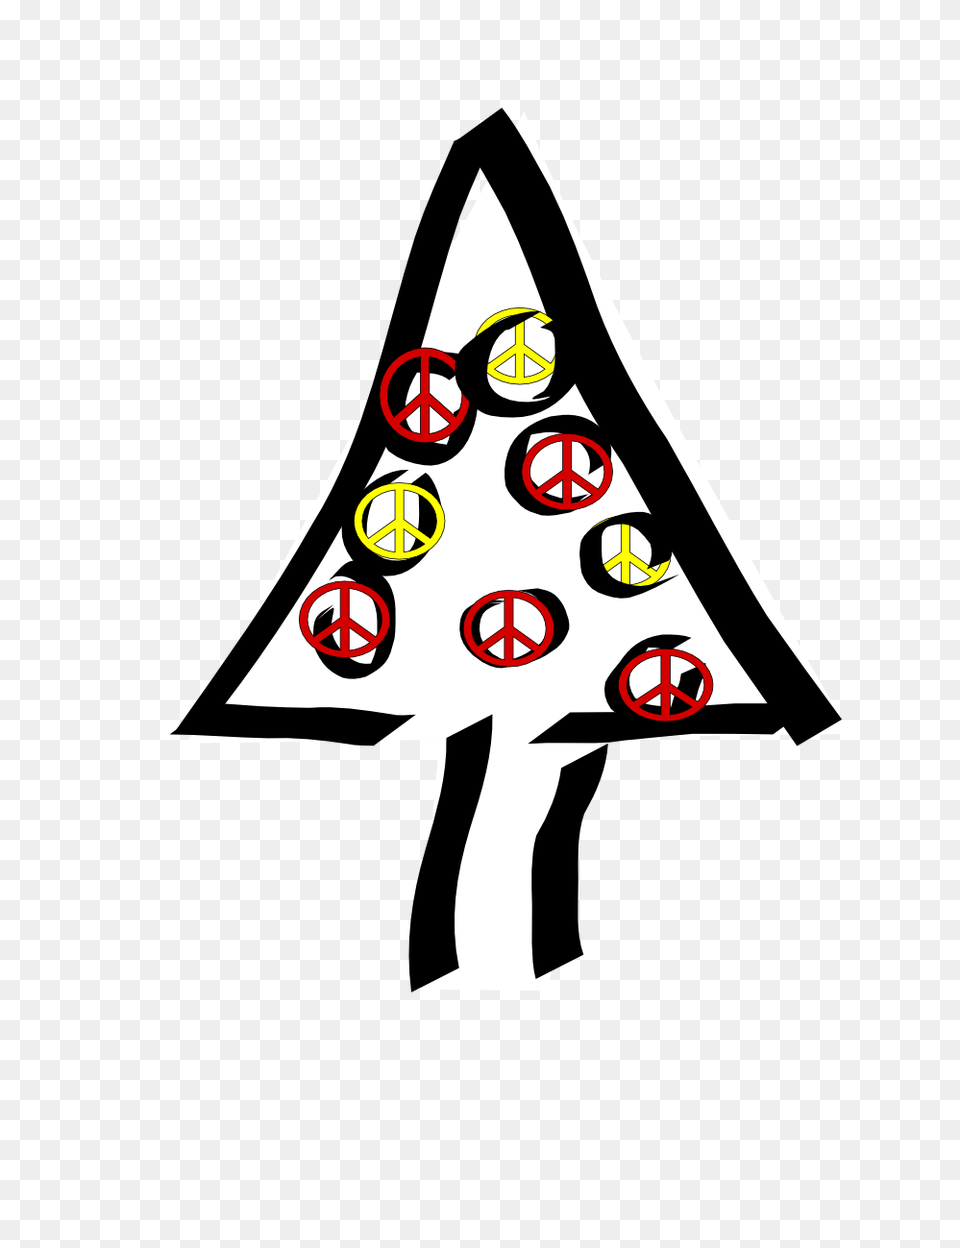 Christmas Peace Sign Clip Art Tree Christmas Xmas Peace Symbol, Triangle Png Image